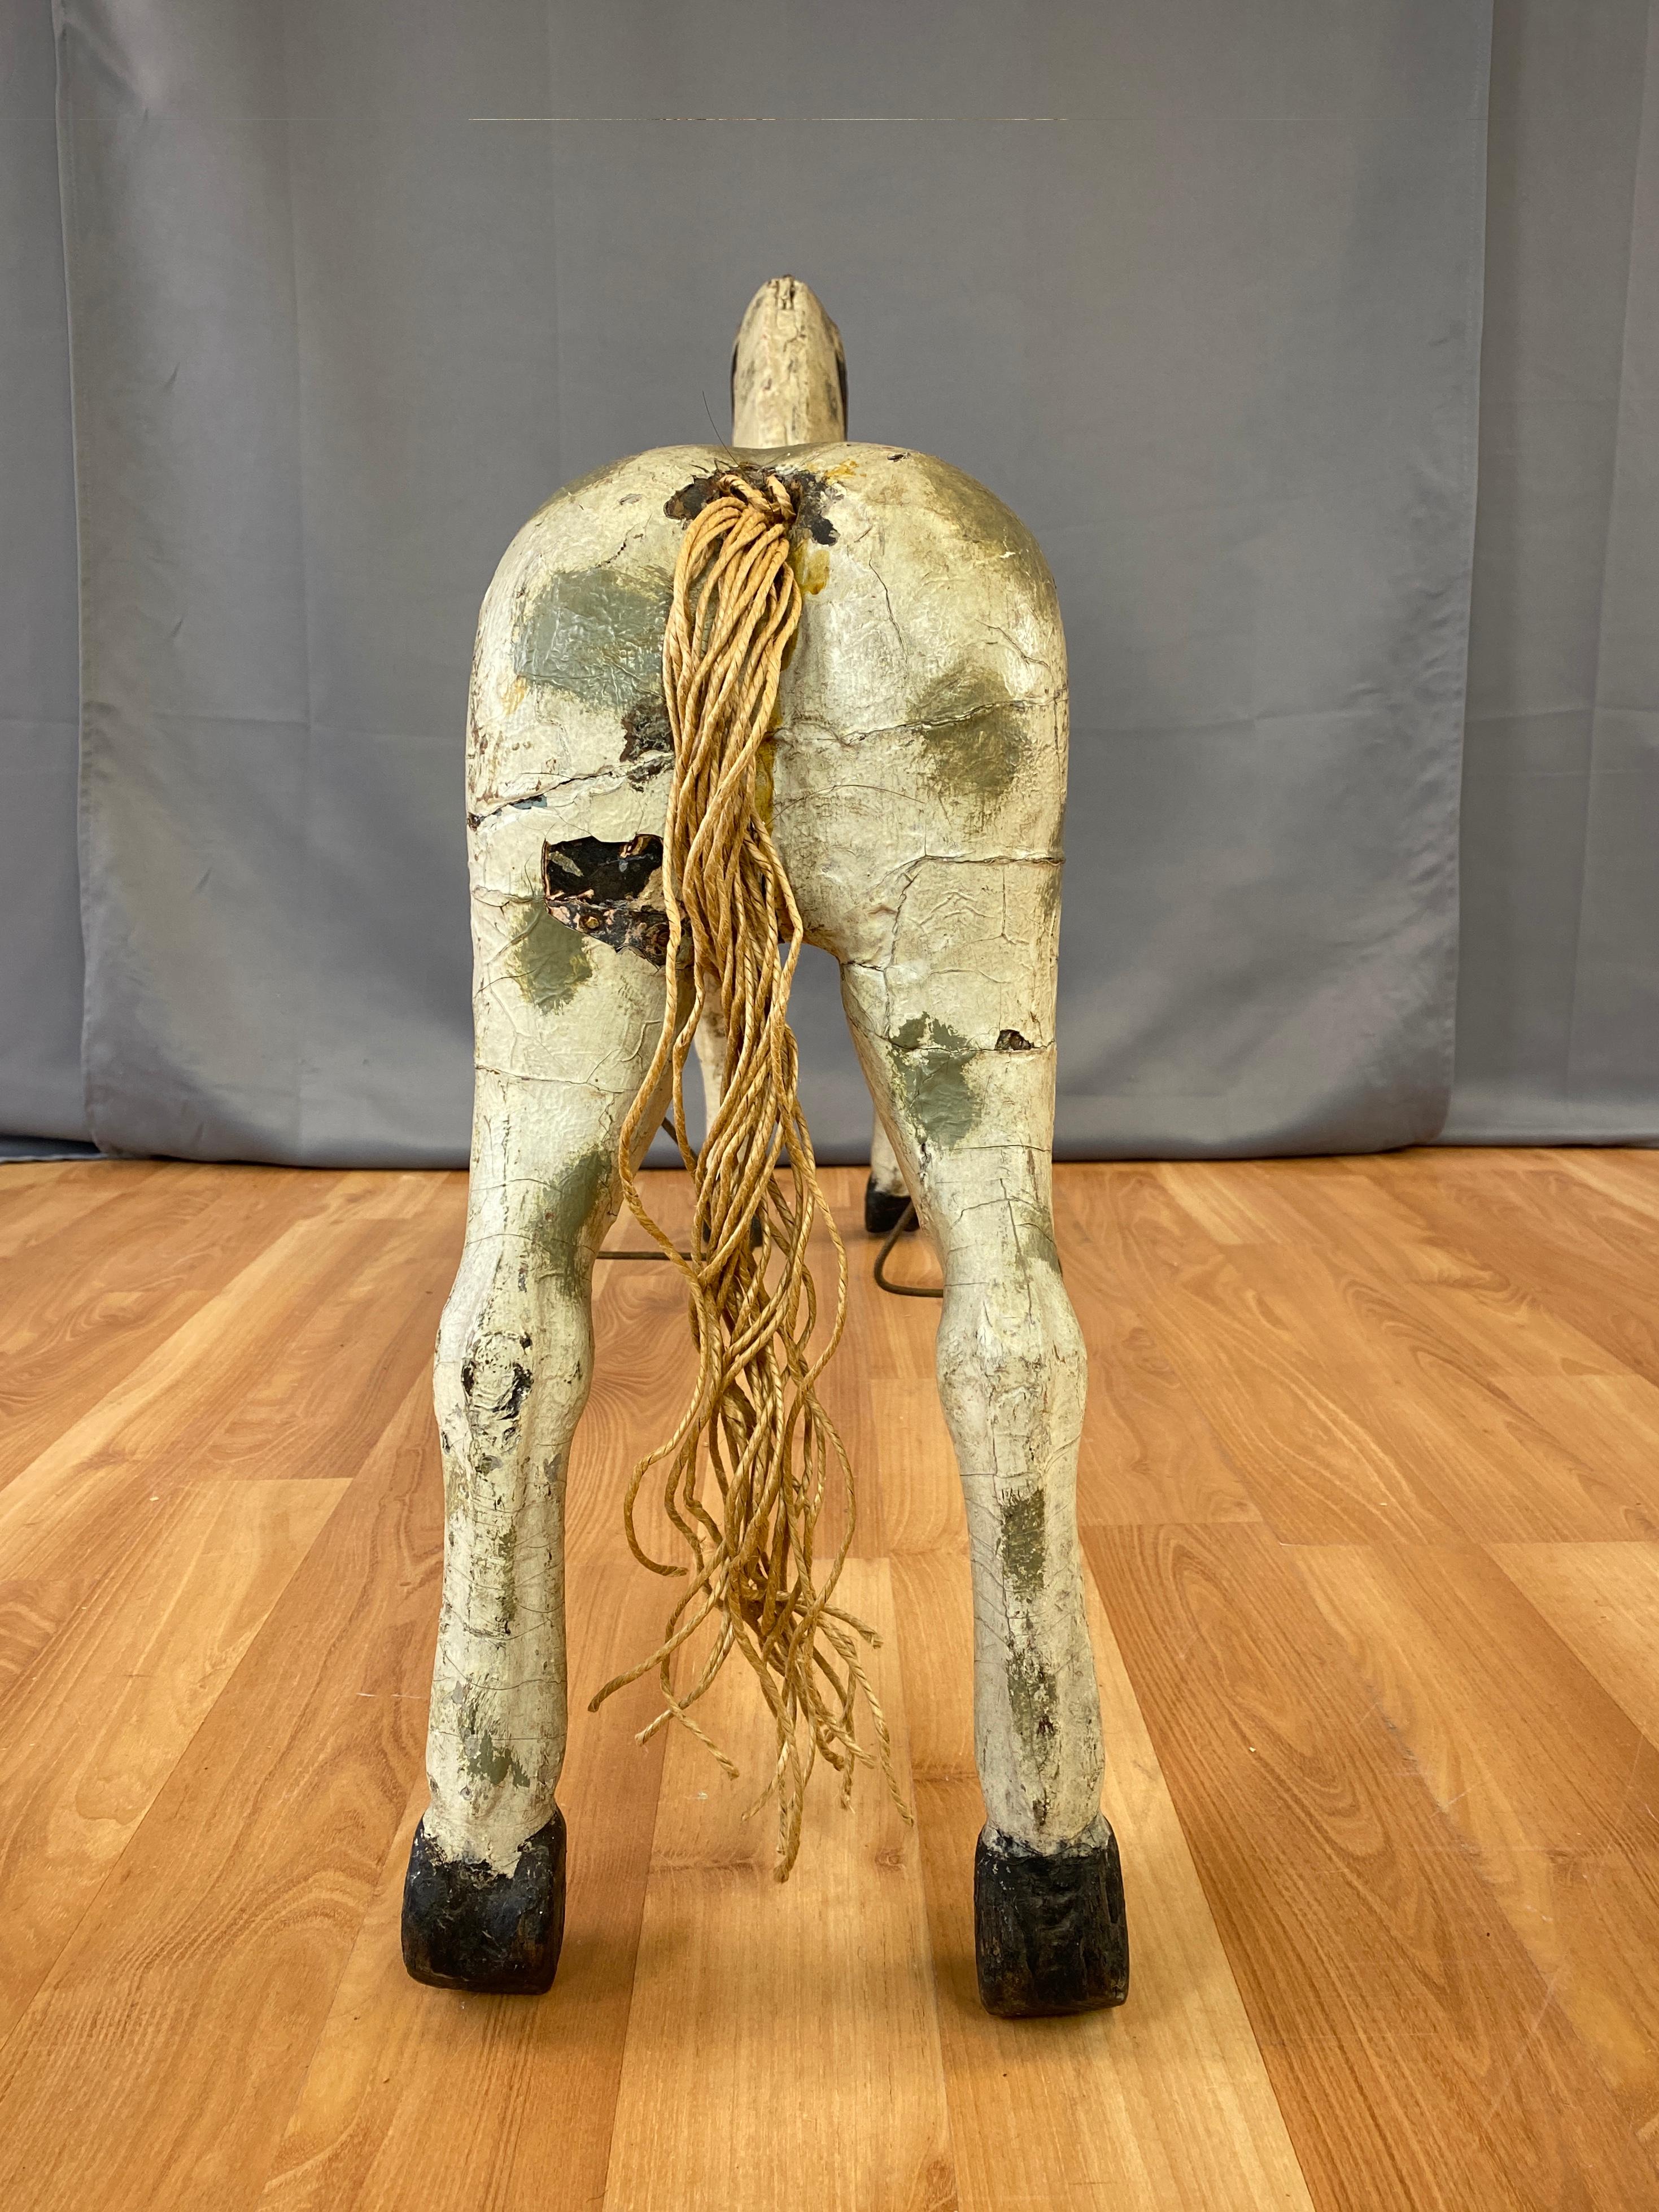 carousel horse costume